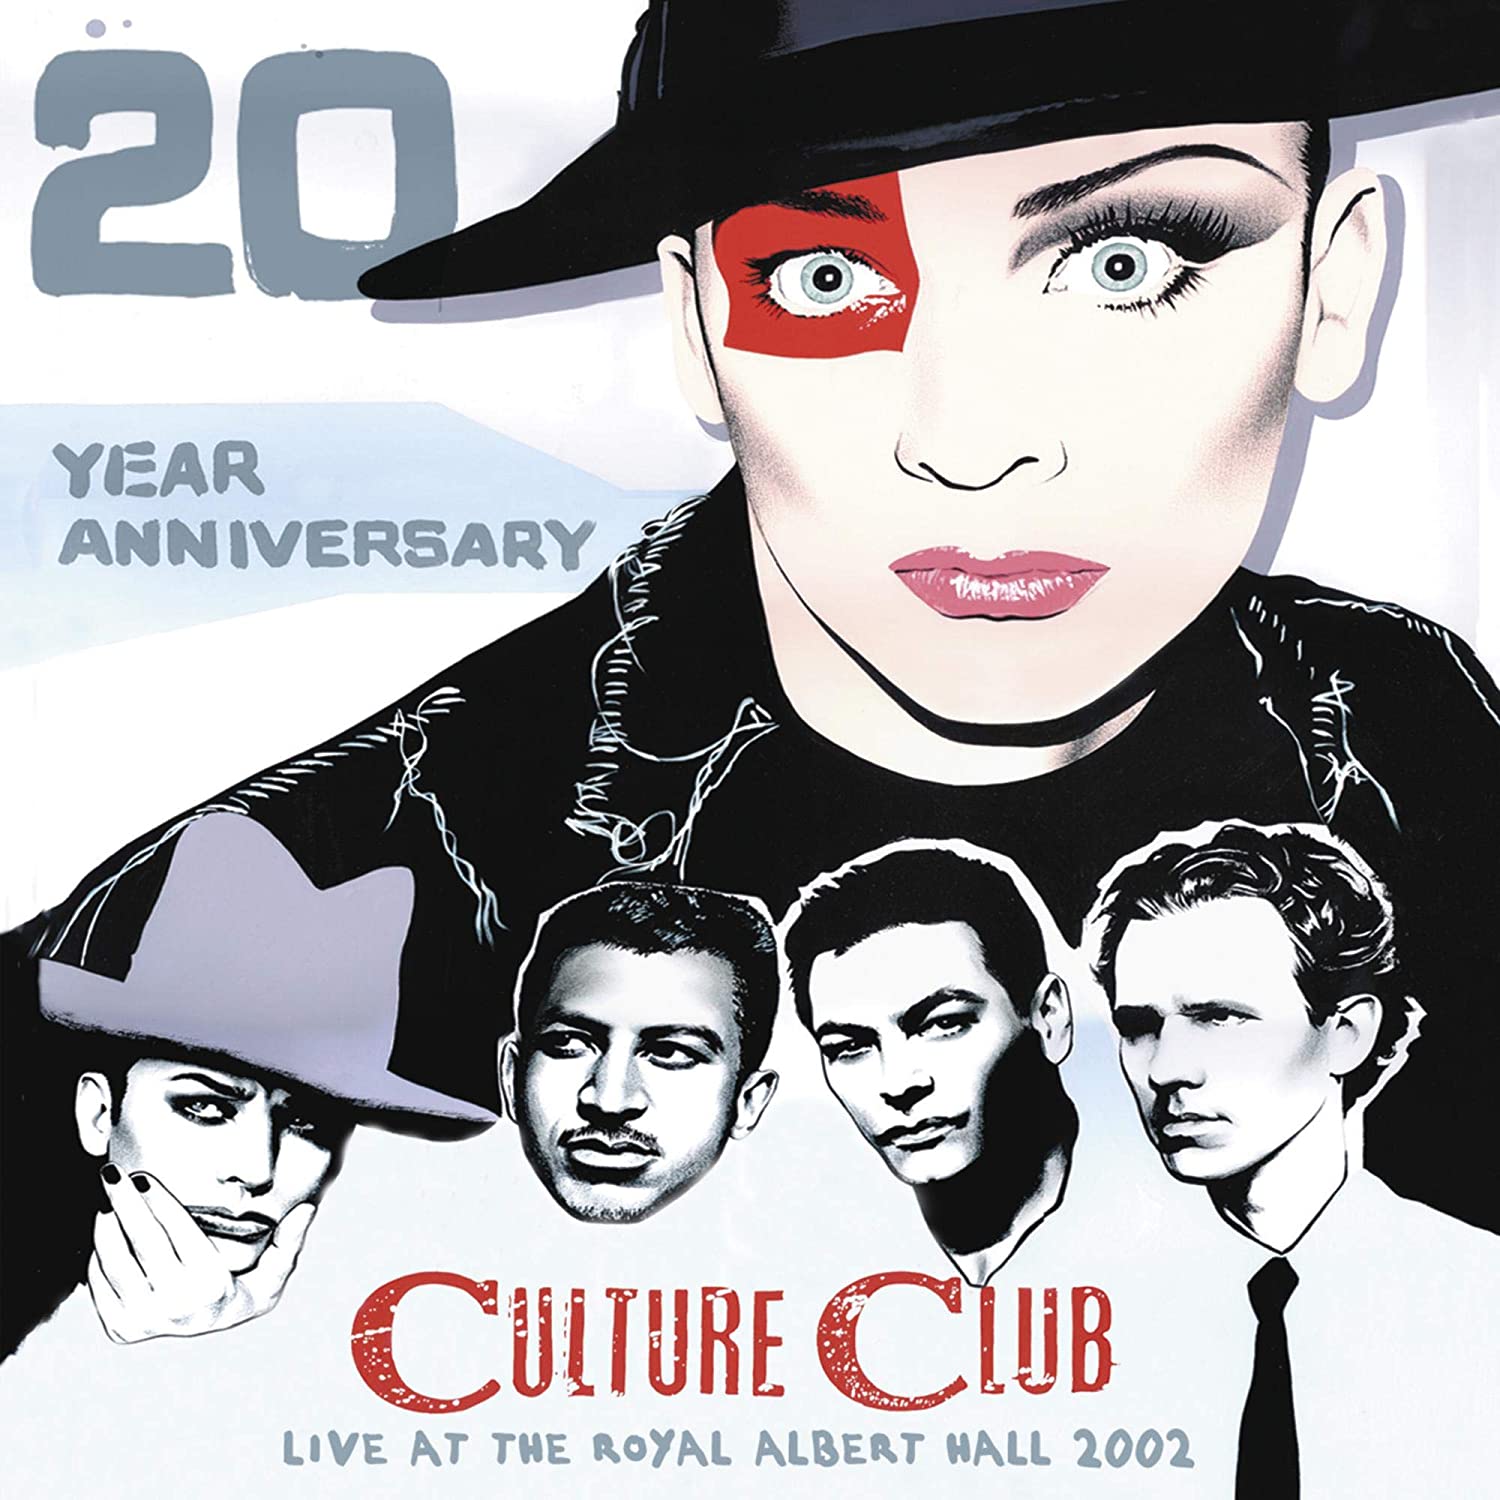 Culture Club – Live At The Royal Albert Hall 2002 (20 Year Anniversary) 2 x VINYL LP SET